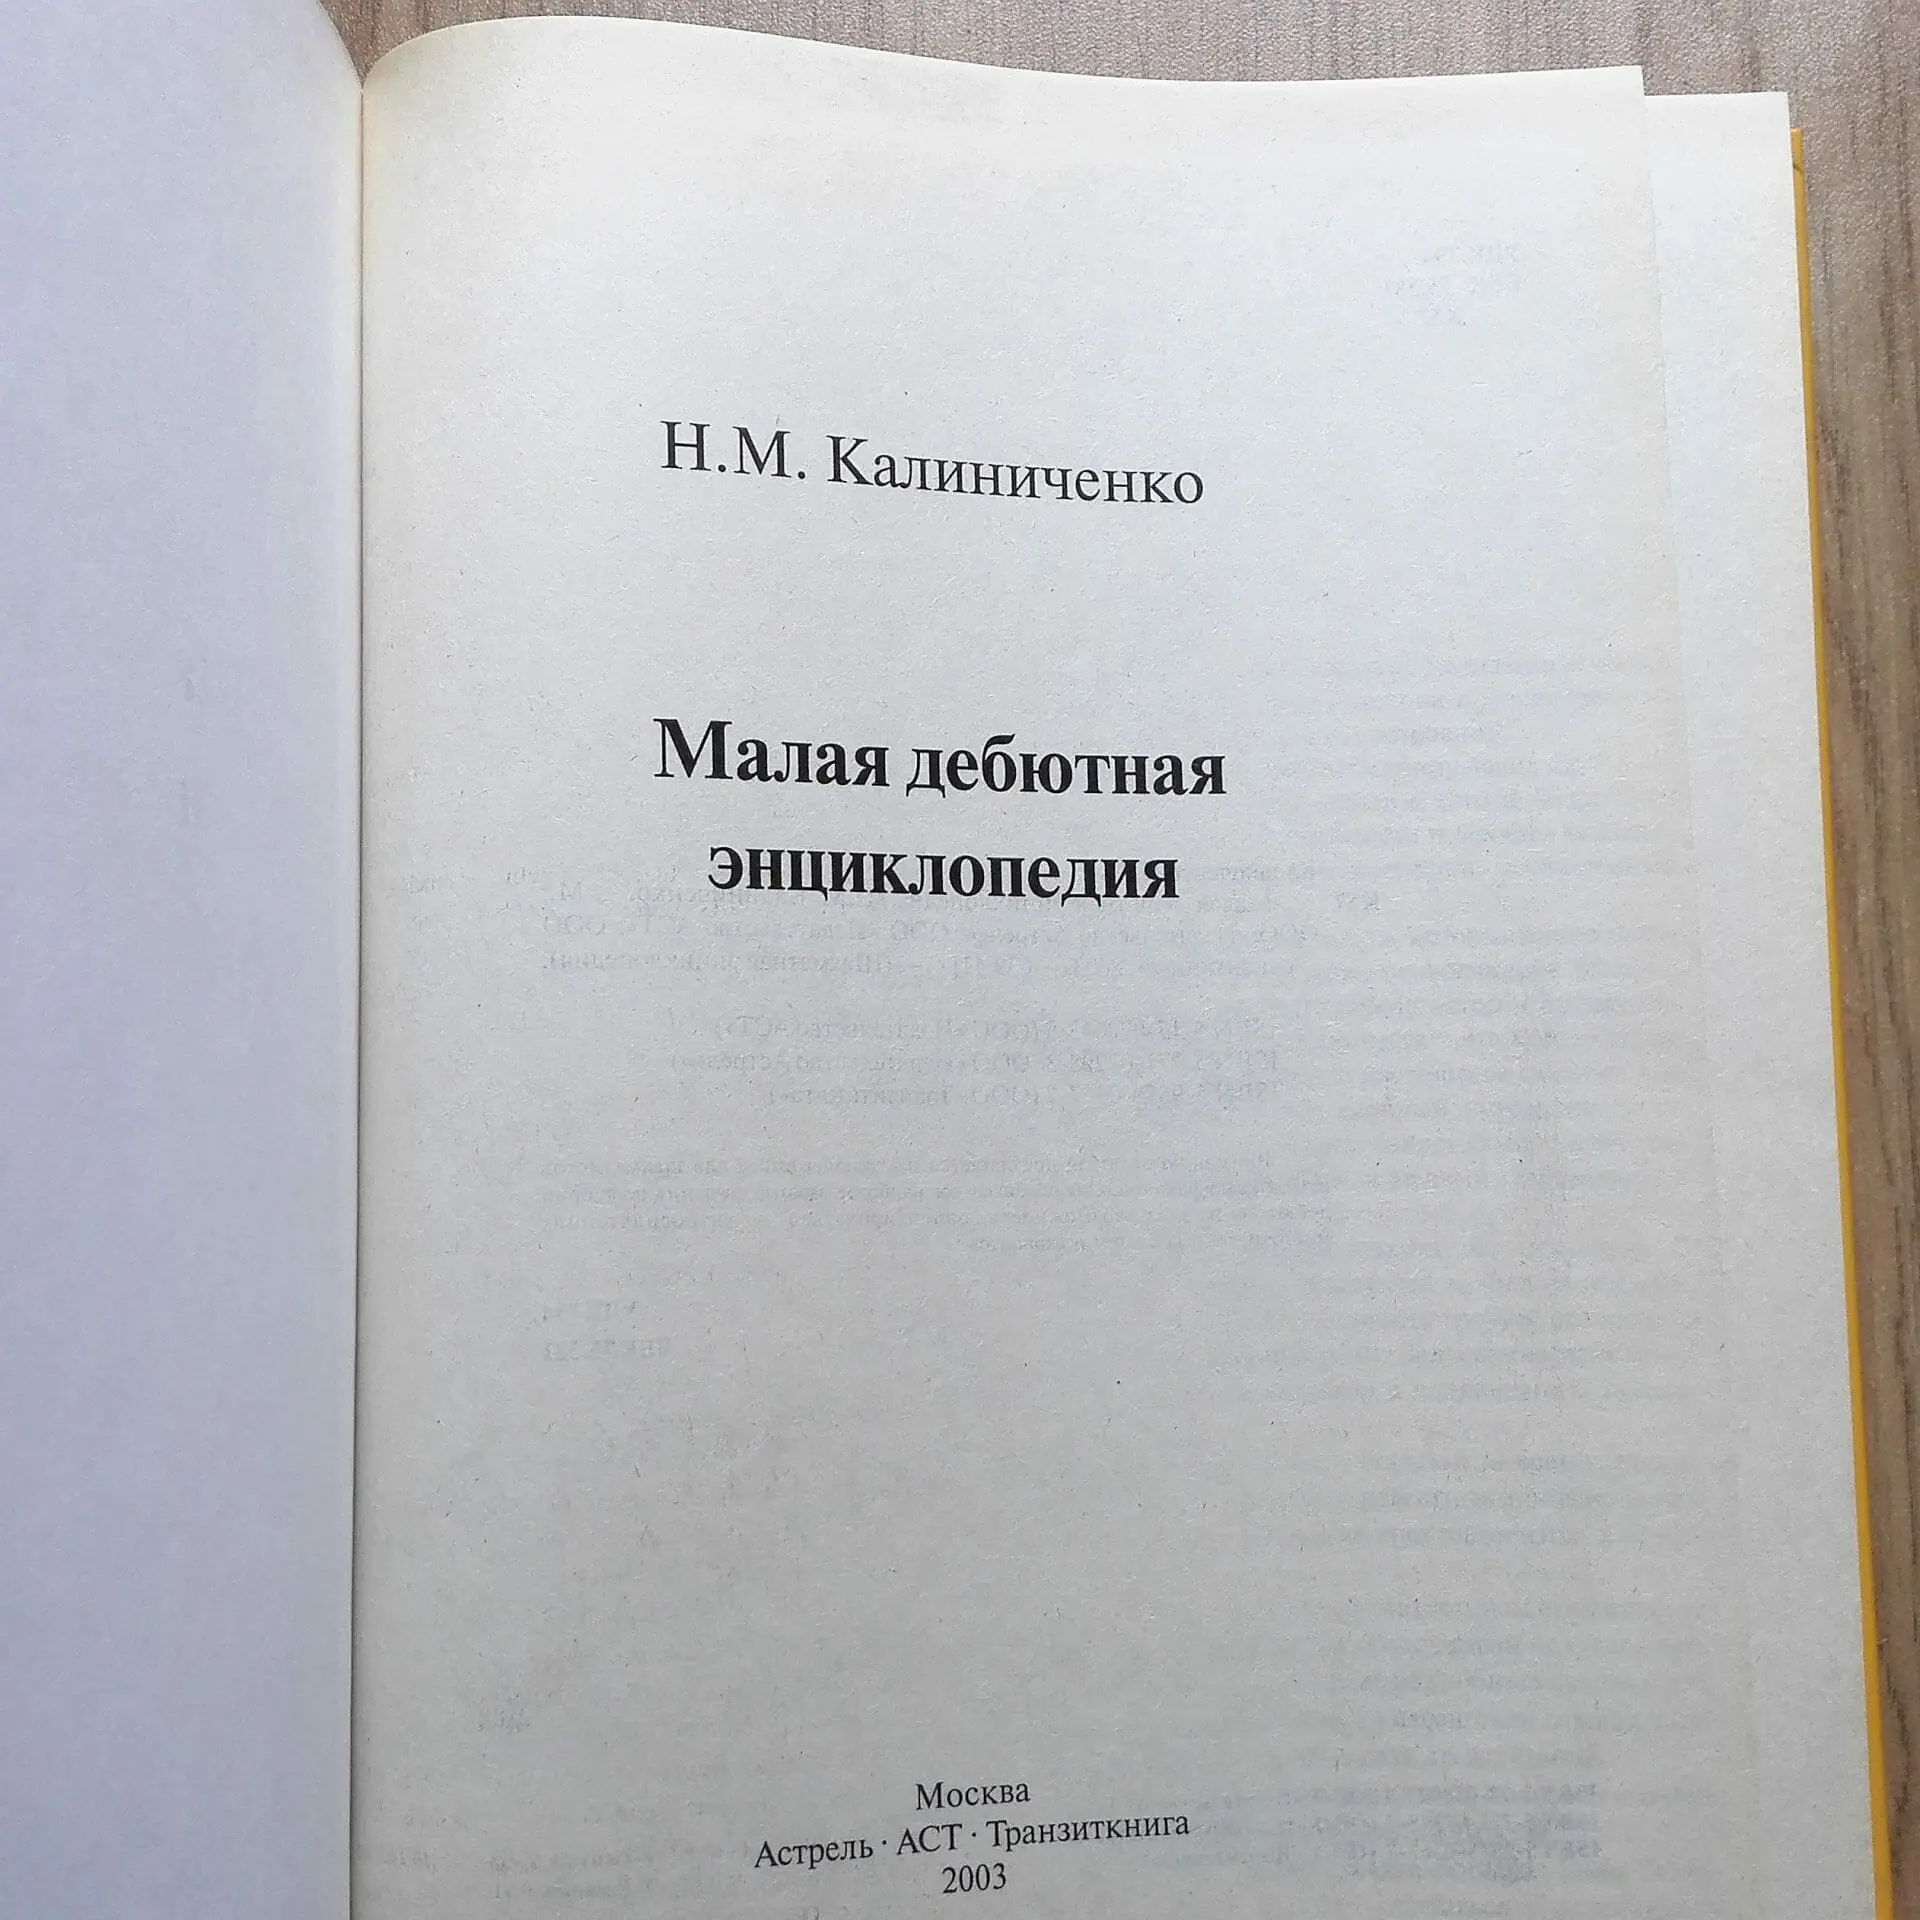 chess literature in russian.jpg